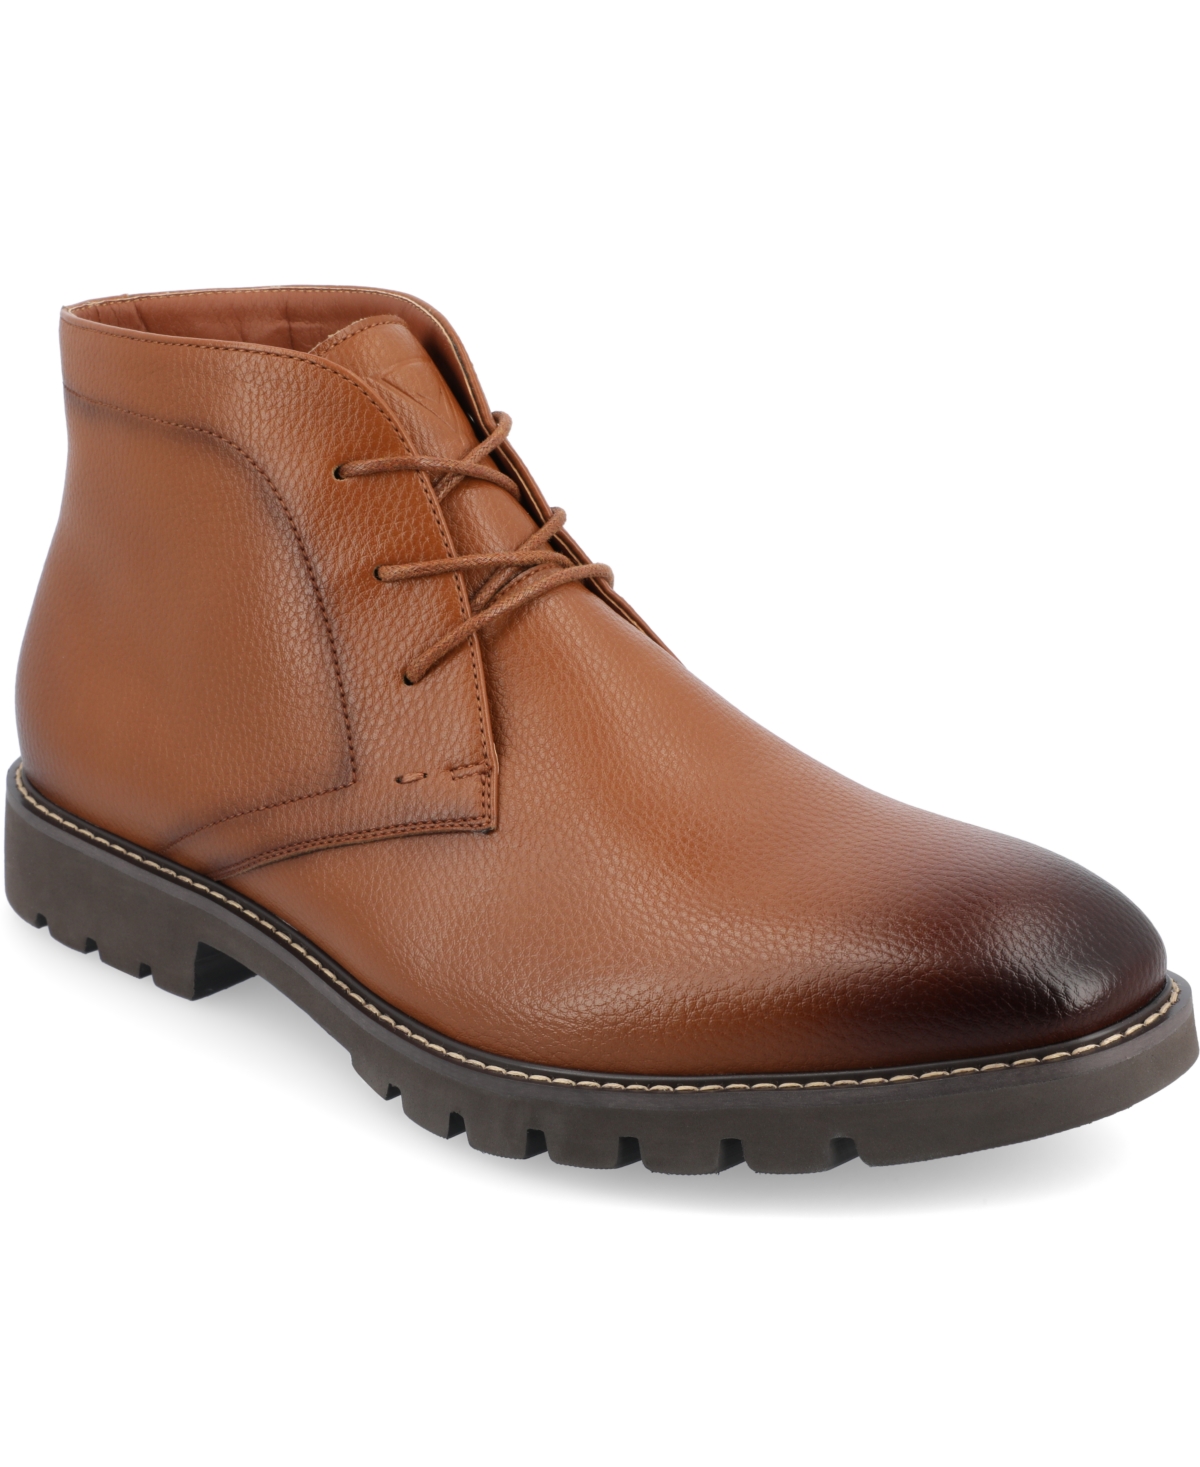 Men's Arturo Tru Comfort Foam Plain Toe Chukka Boots - Cognac